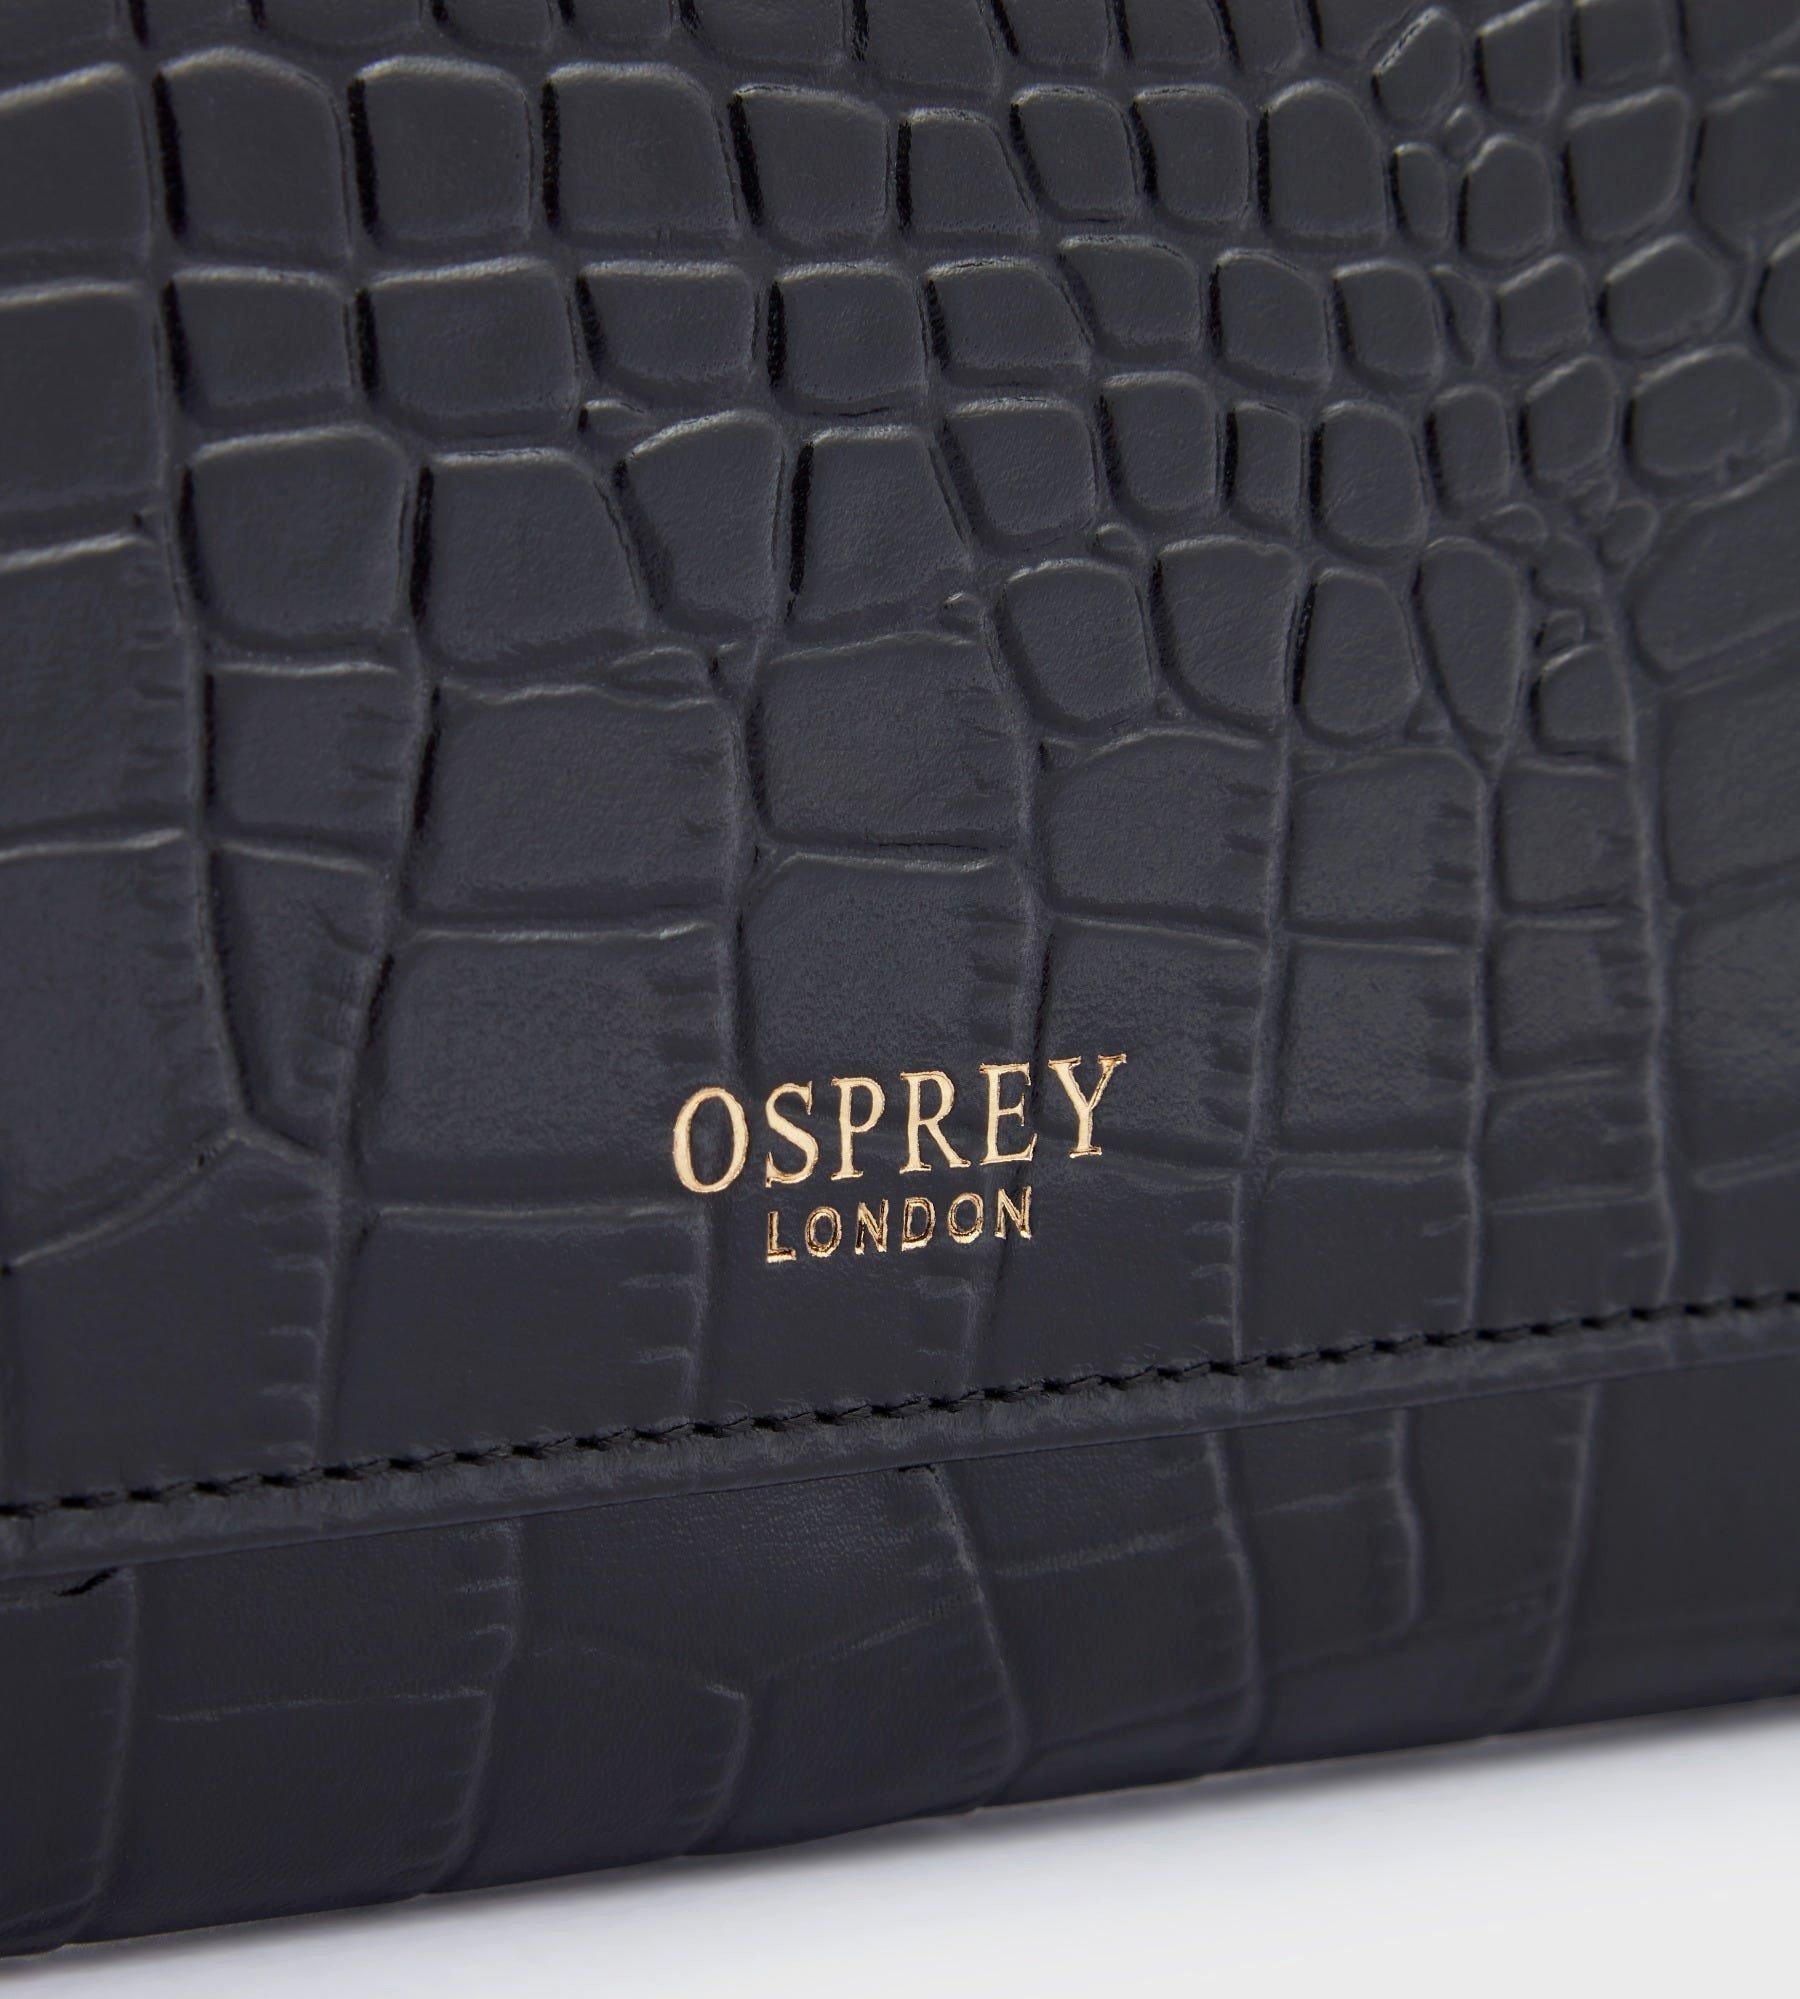 The Carina Shrug Italian Leather Handbag in black | OSPREY LONDON